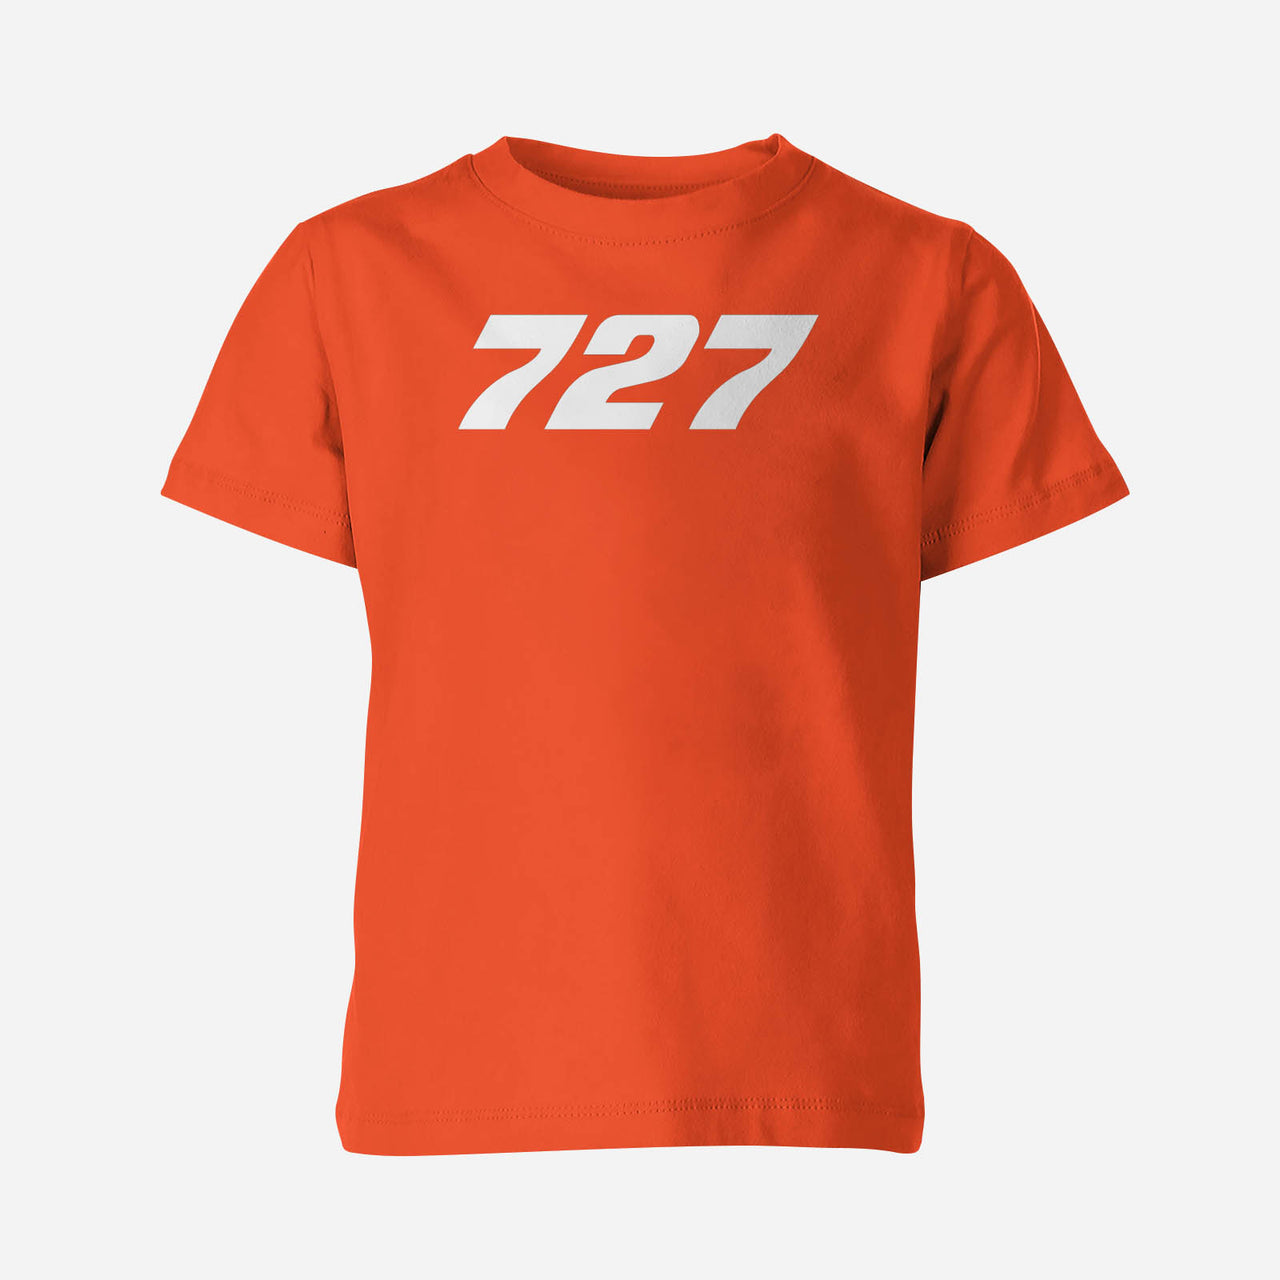 727 Flat Text Designed Children T-Shirts